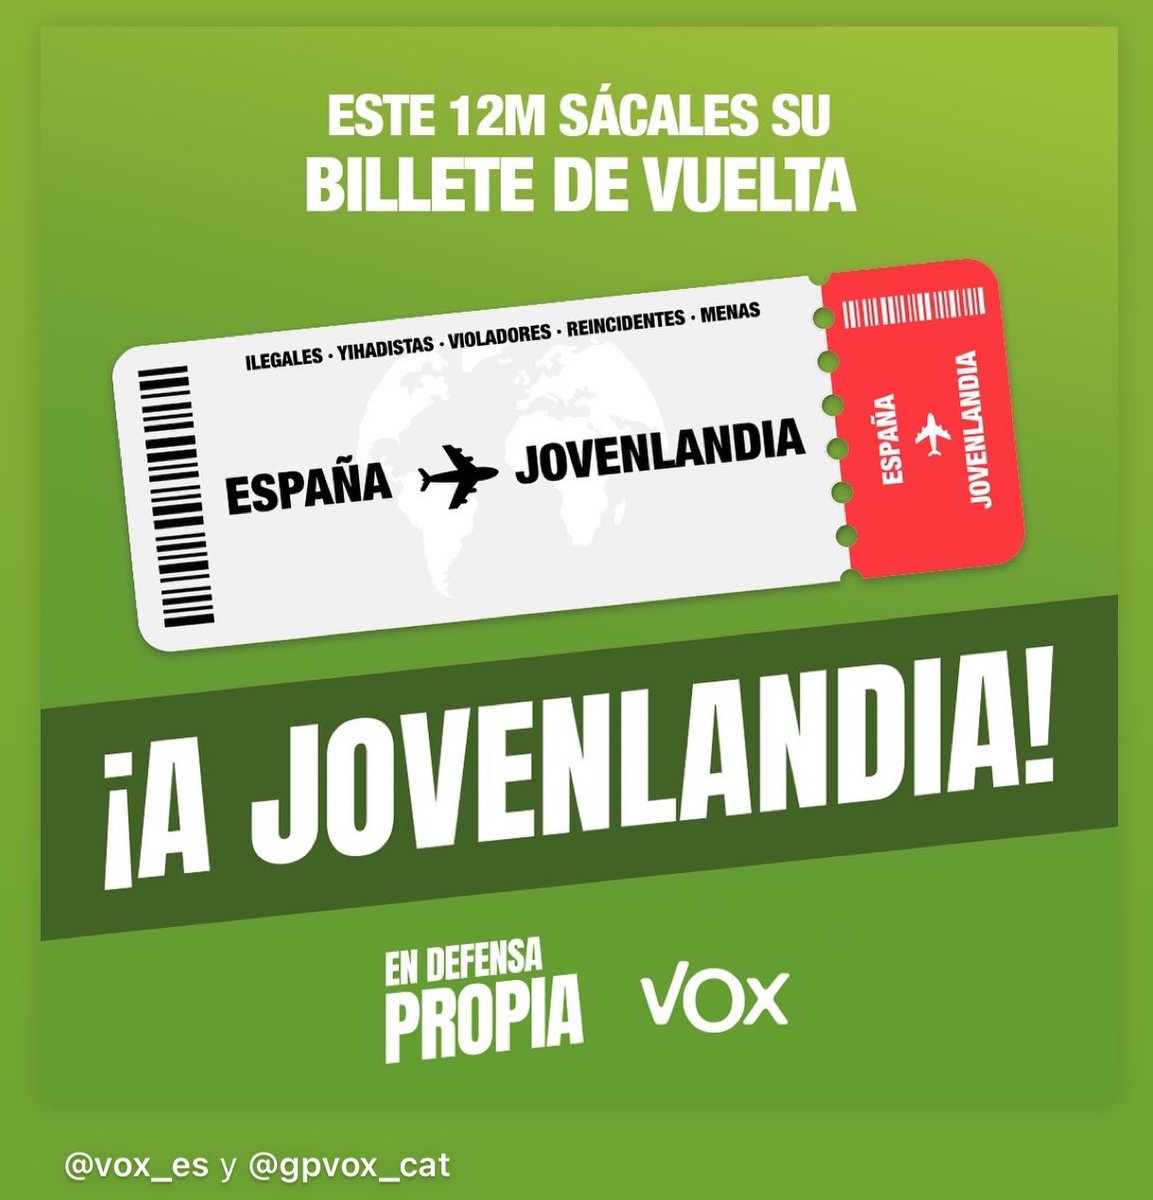 Hay qué votar a VOX.
12M
#EnDefensaPropia
#StopIslam